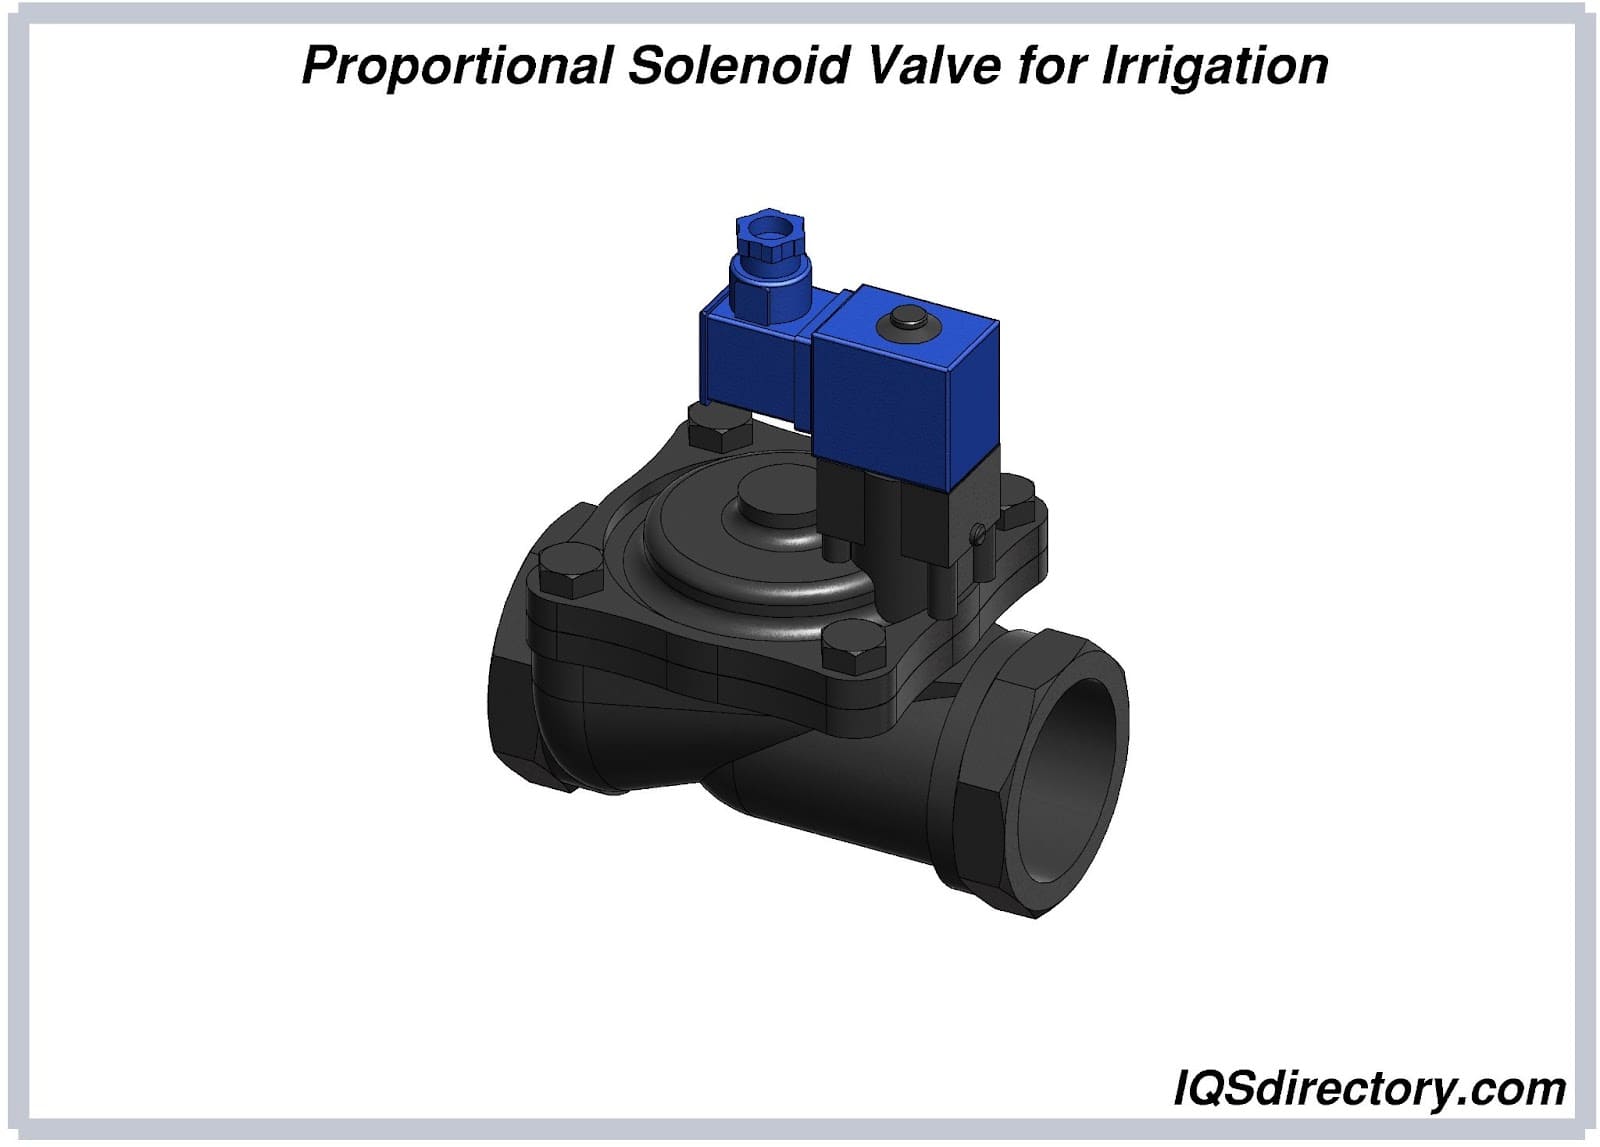 Proportional Solenoid Valve for Irrigation